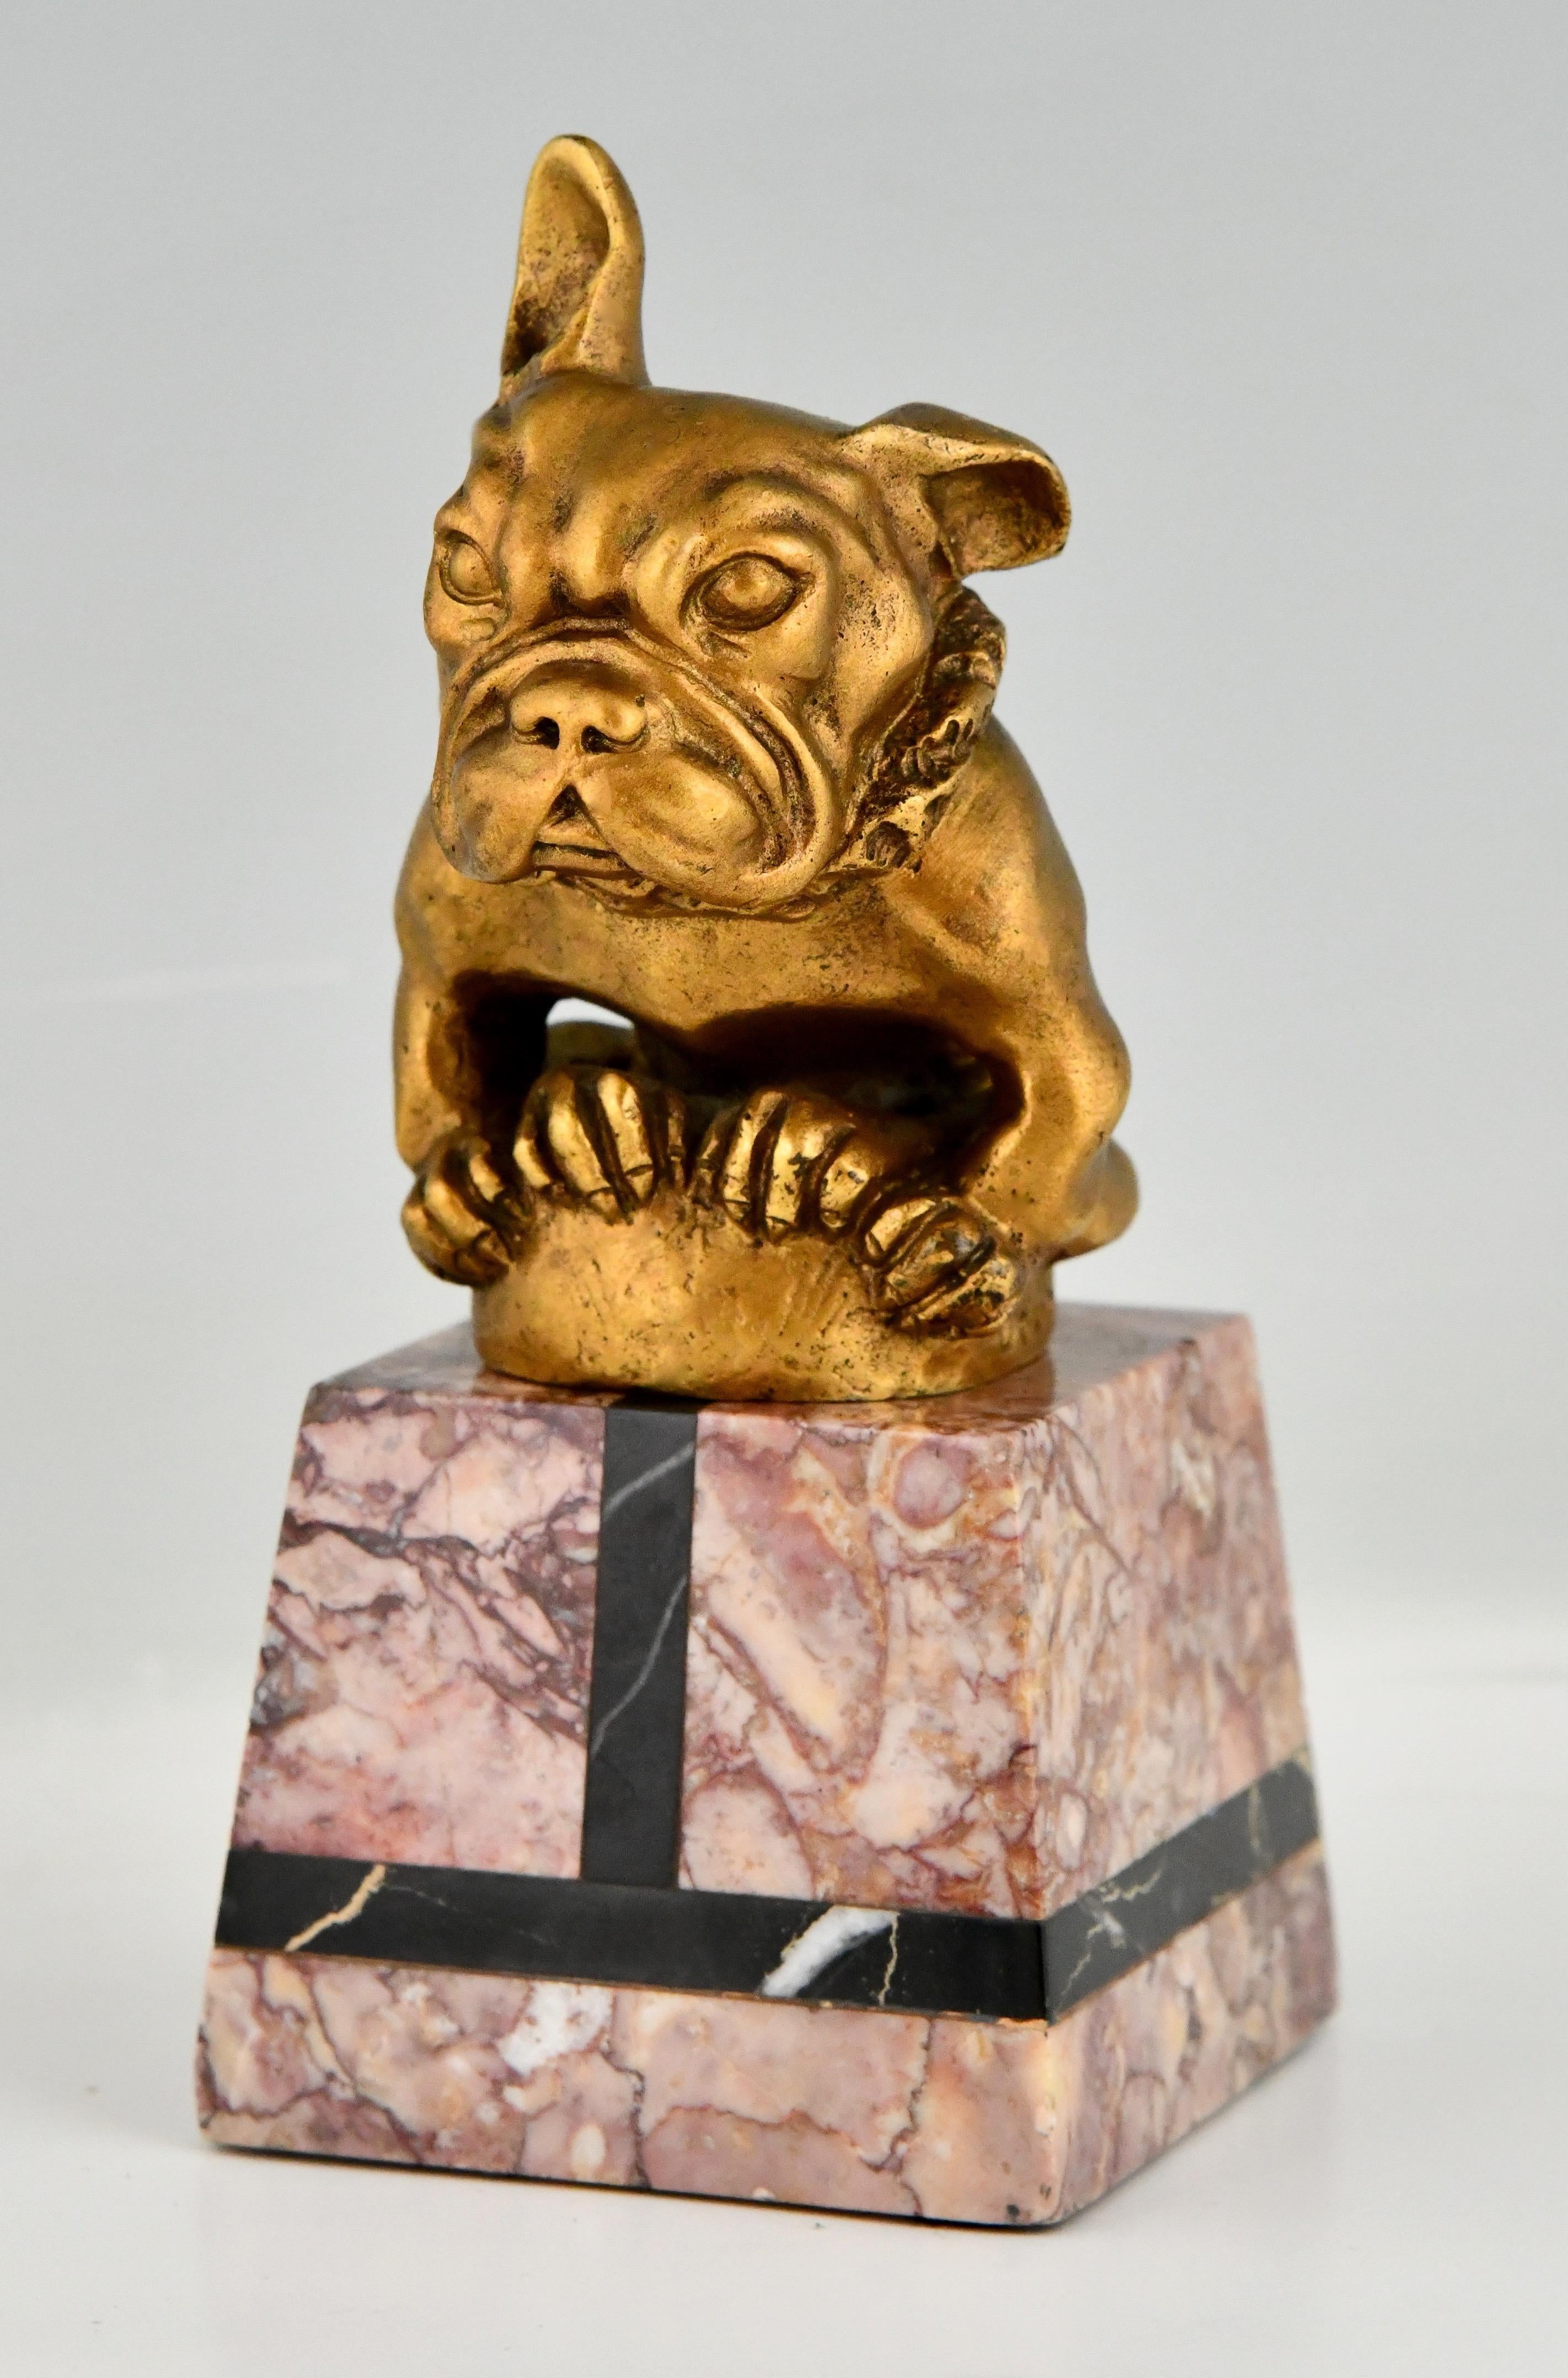 Bulldog francés mascota de automóvil de bronce Art Déco firmado por Gaston H. Bourcart.
El adorno de la capucha es de bronce dorado y se apoya en una base de mármol. 
Francia 1925.
Esta mascota es la placa ilustrada nº 329 
Mascottes passion,